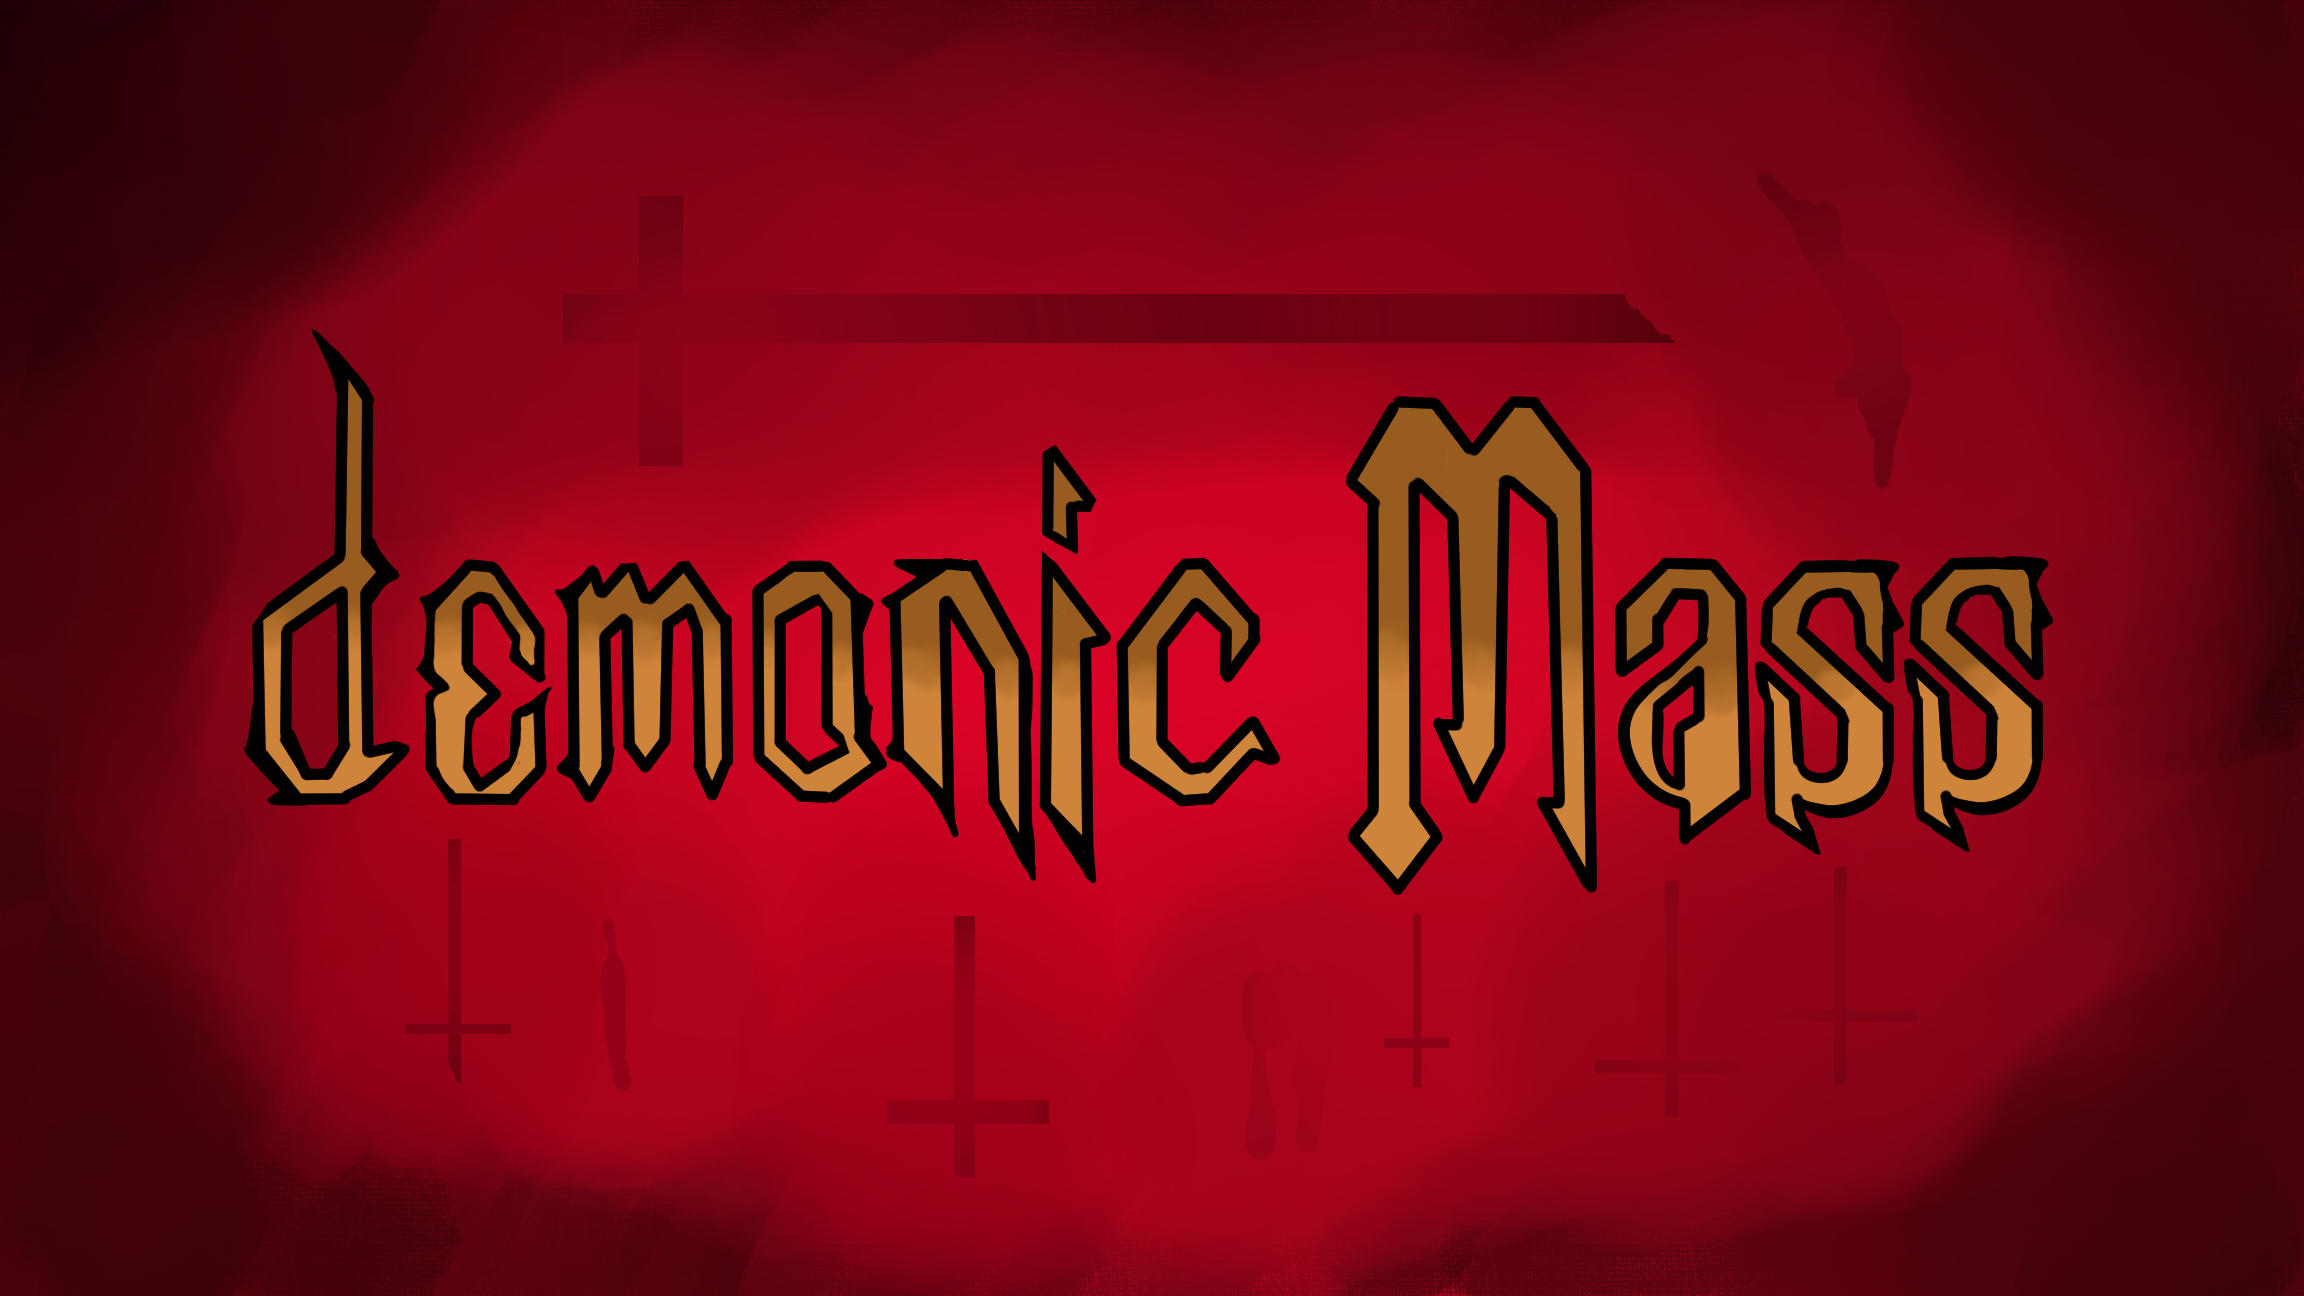 Demonic Mass